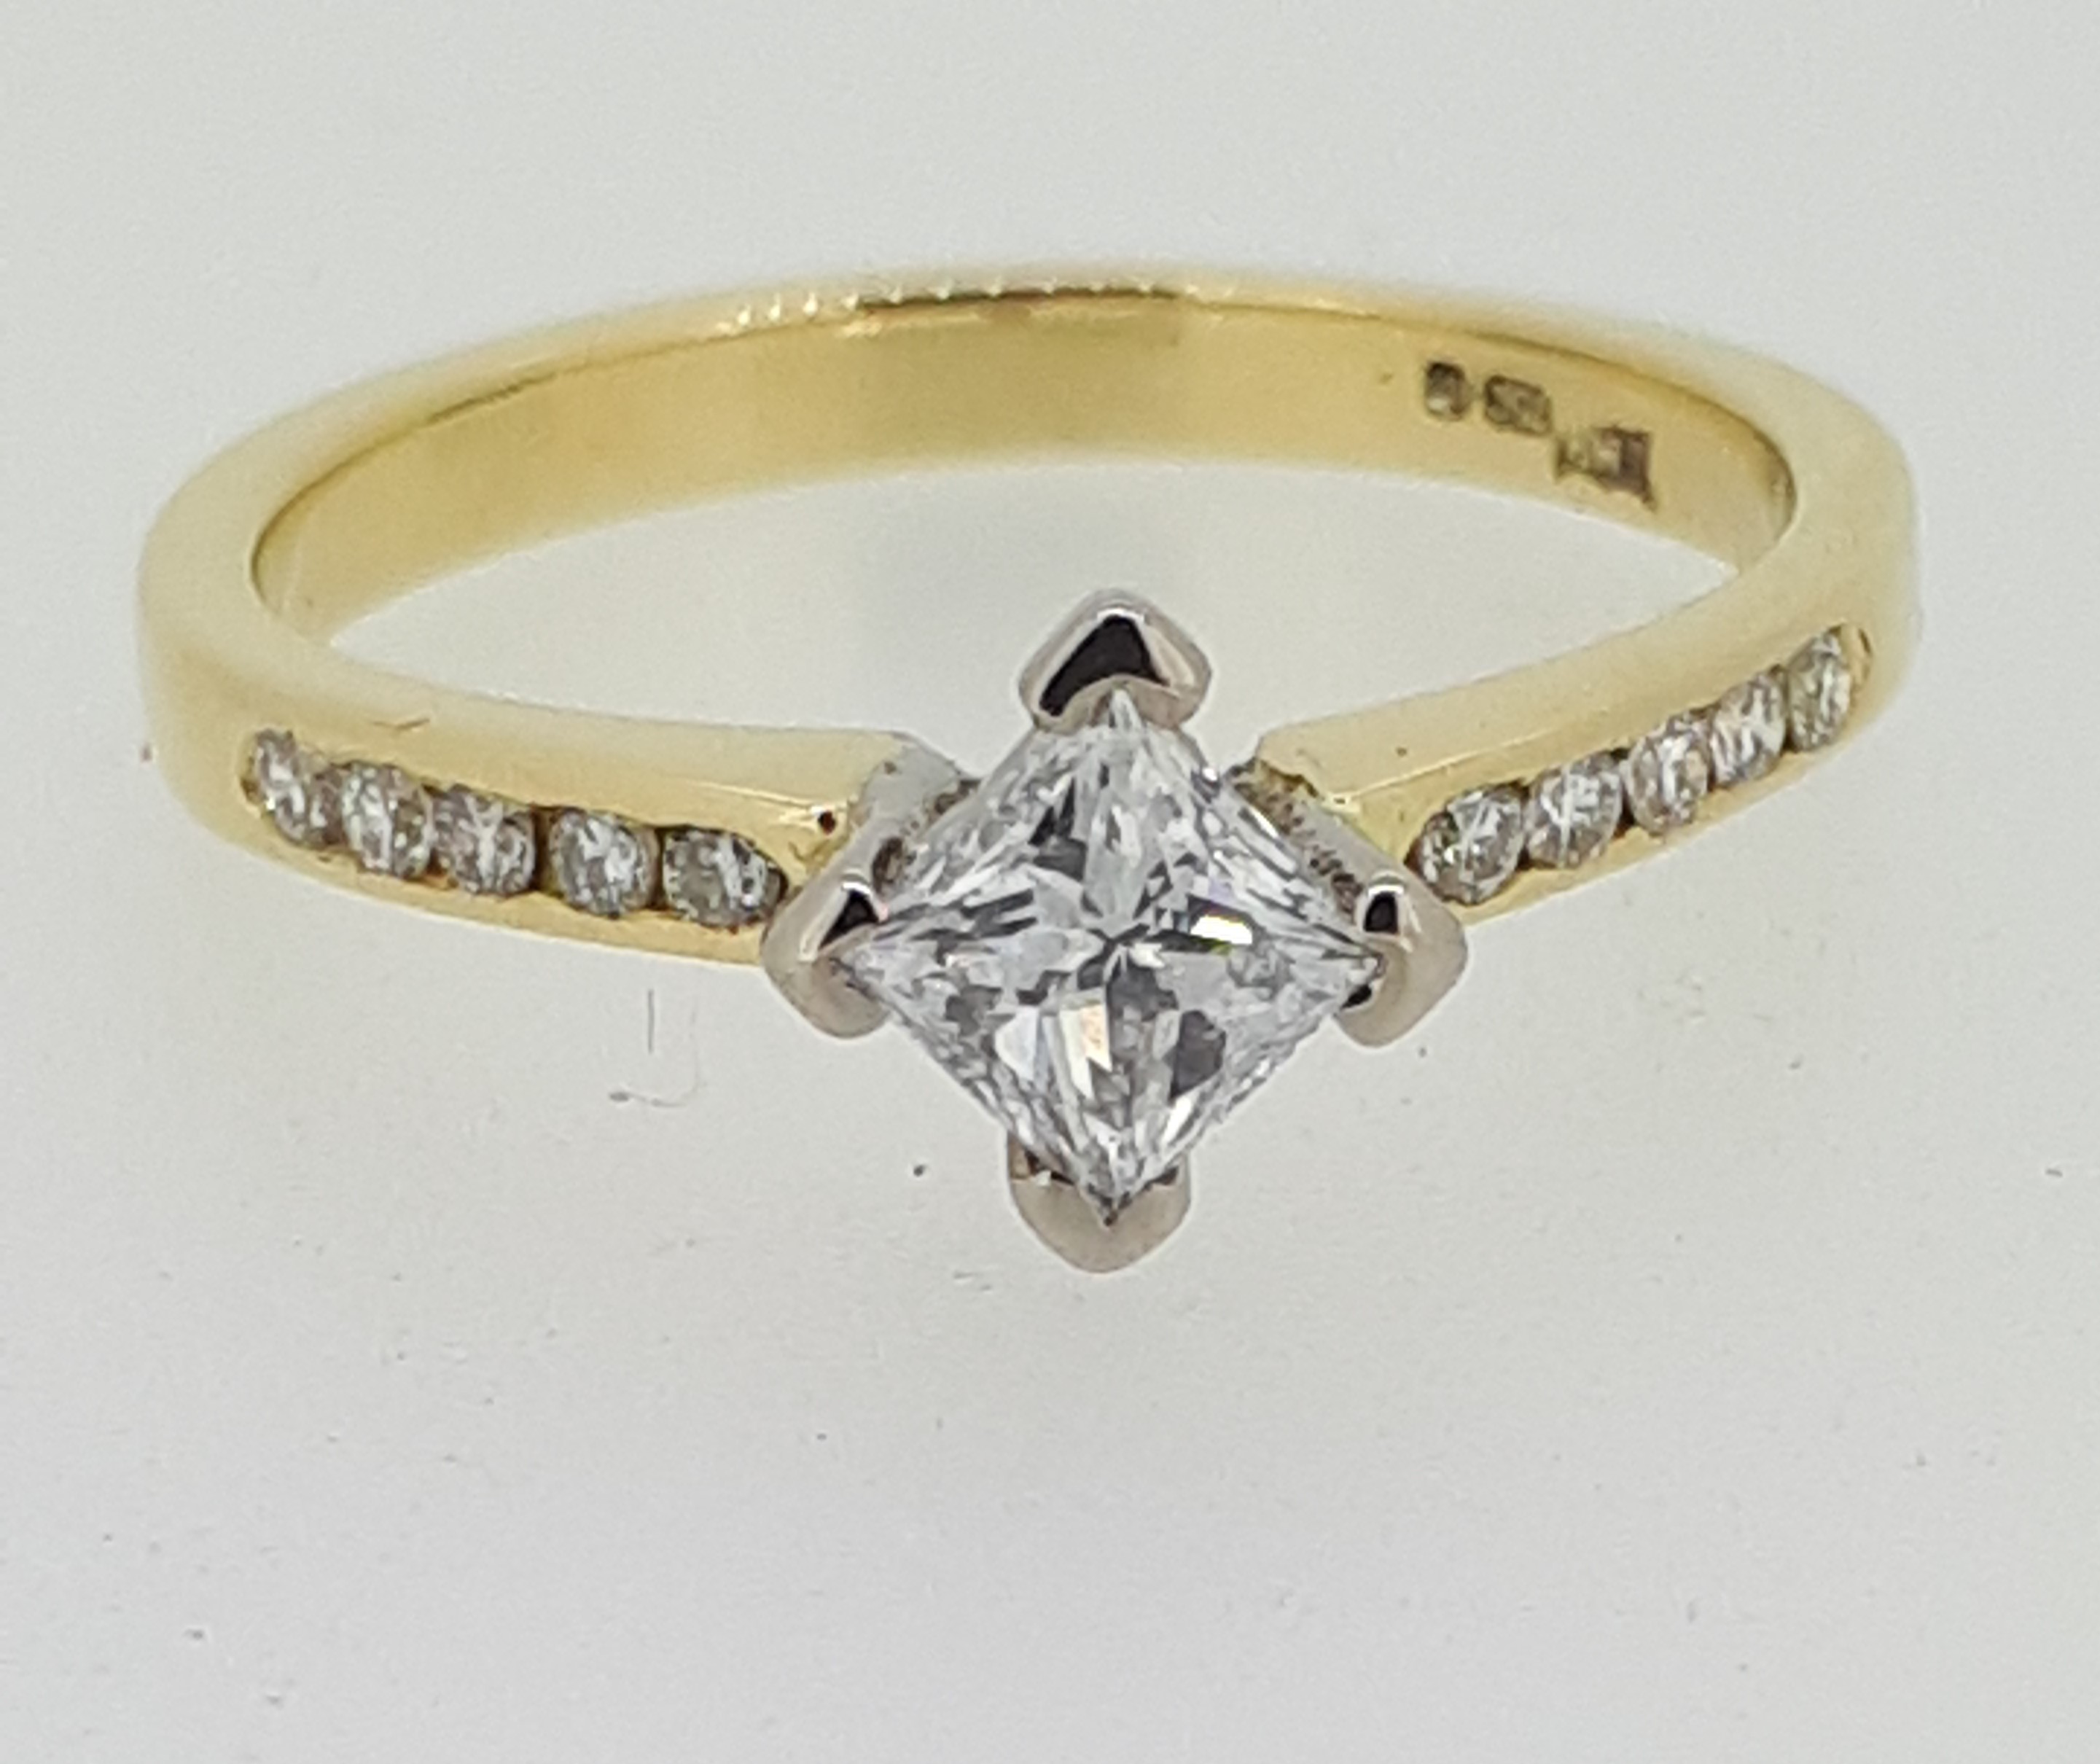 18ct (750) Yellow Gold Princess Cut 0.5ct Diamond Ring with Diamond Shoulders